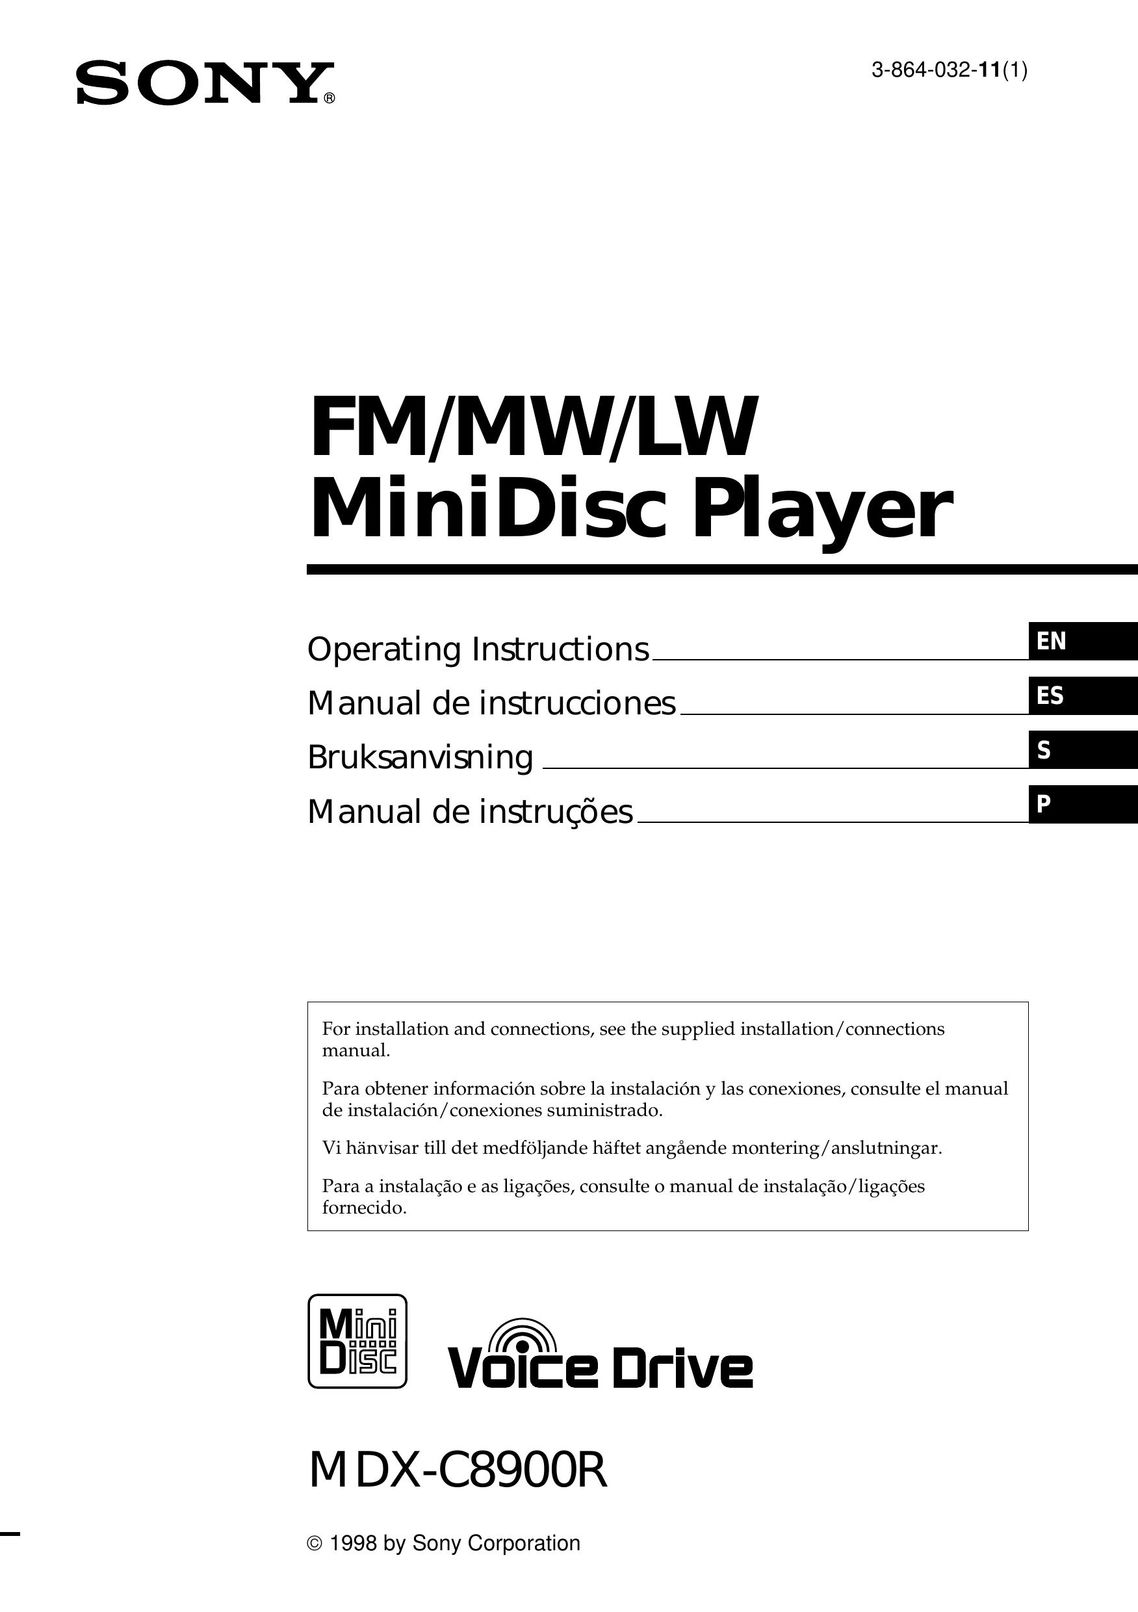 Sony MDX-C8900R MiniDisc Player User Manual